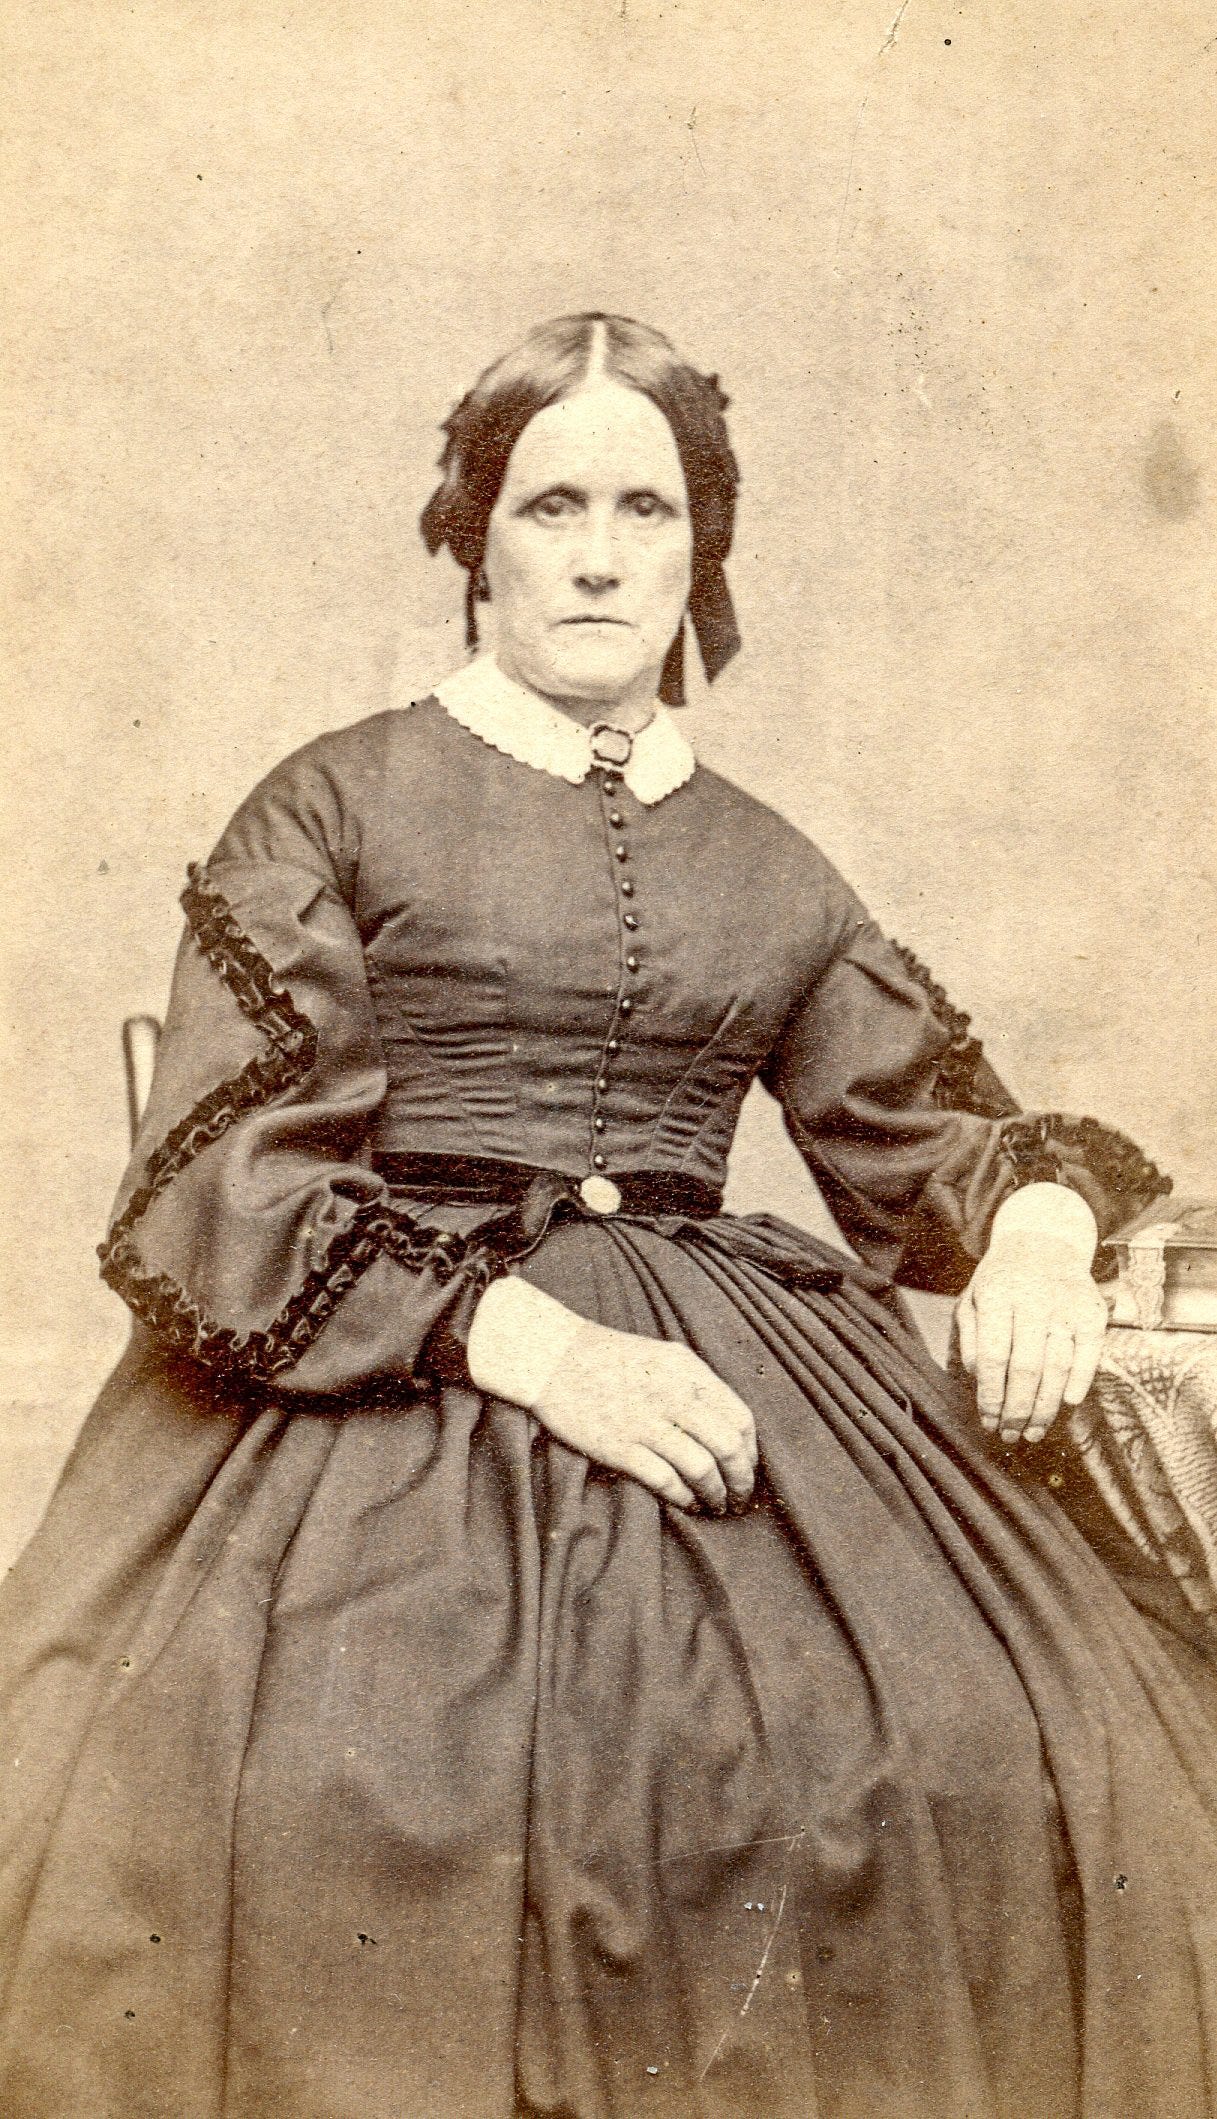 Mrs. Emerson Howe